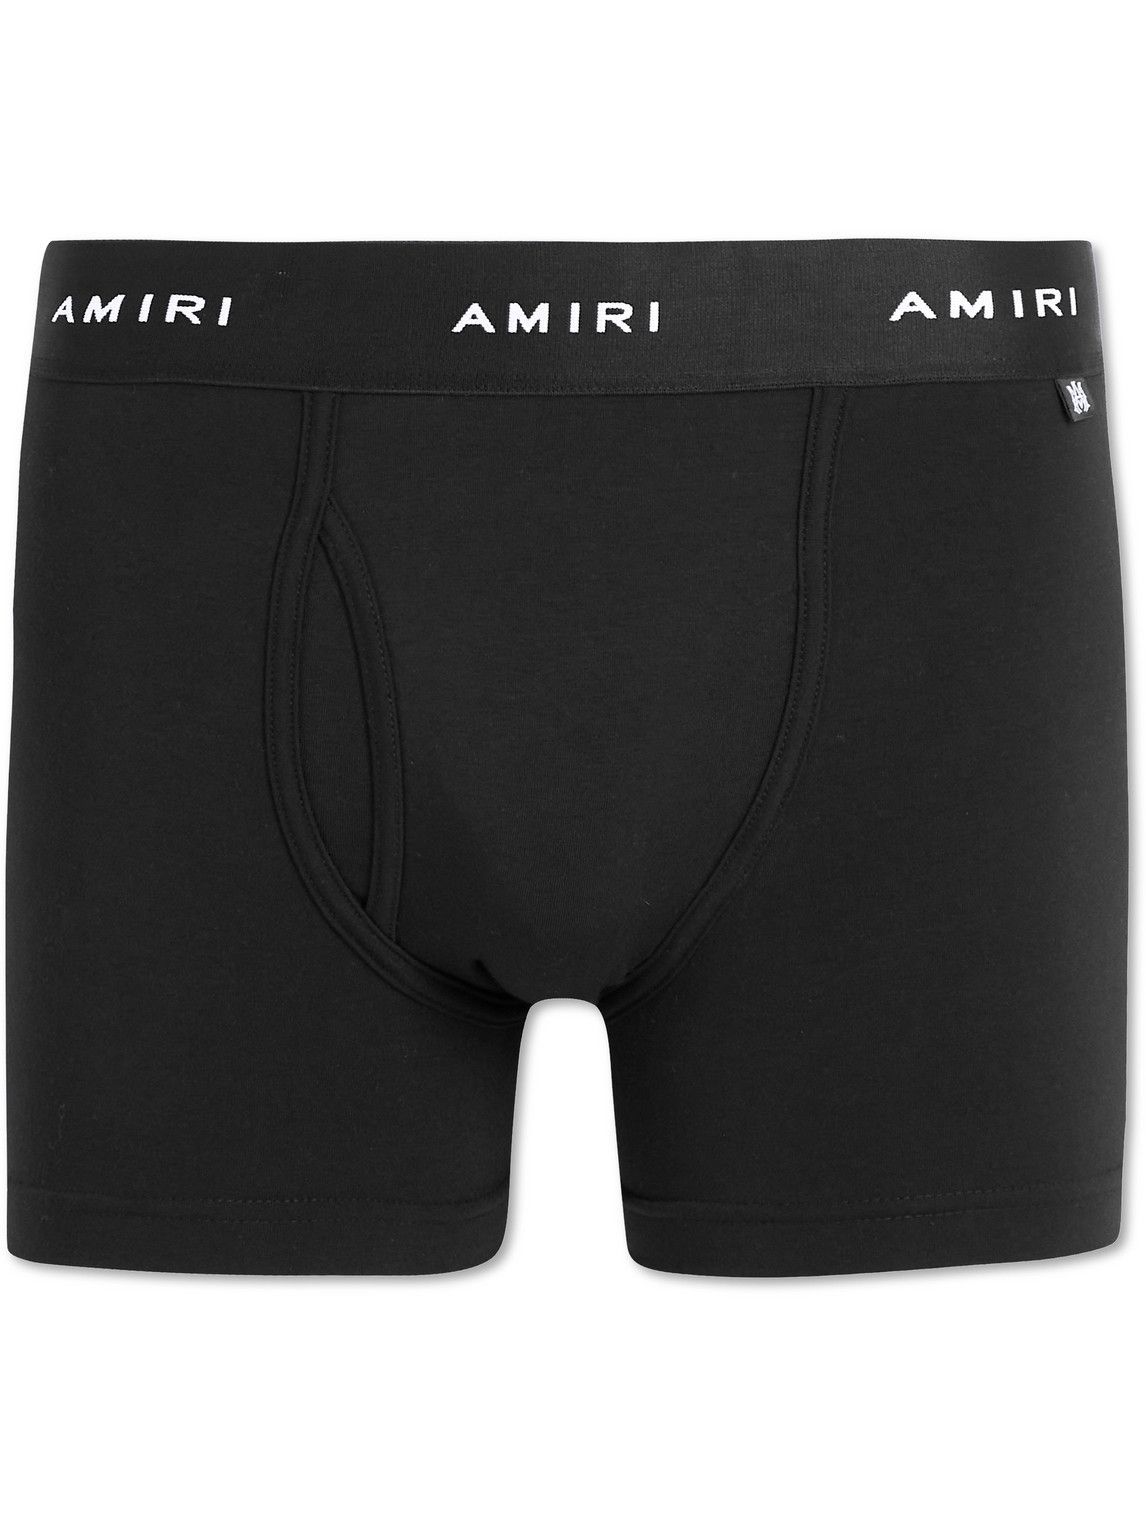 AMIRI - Stretch Cotton and Modal-Blend Jersey Boxer Briefs - Black Amiri